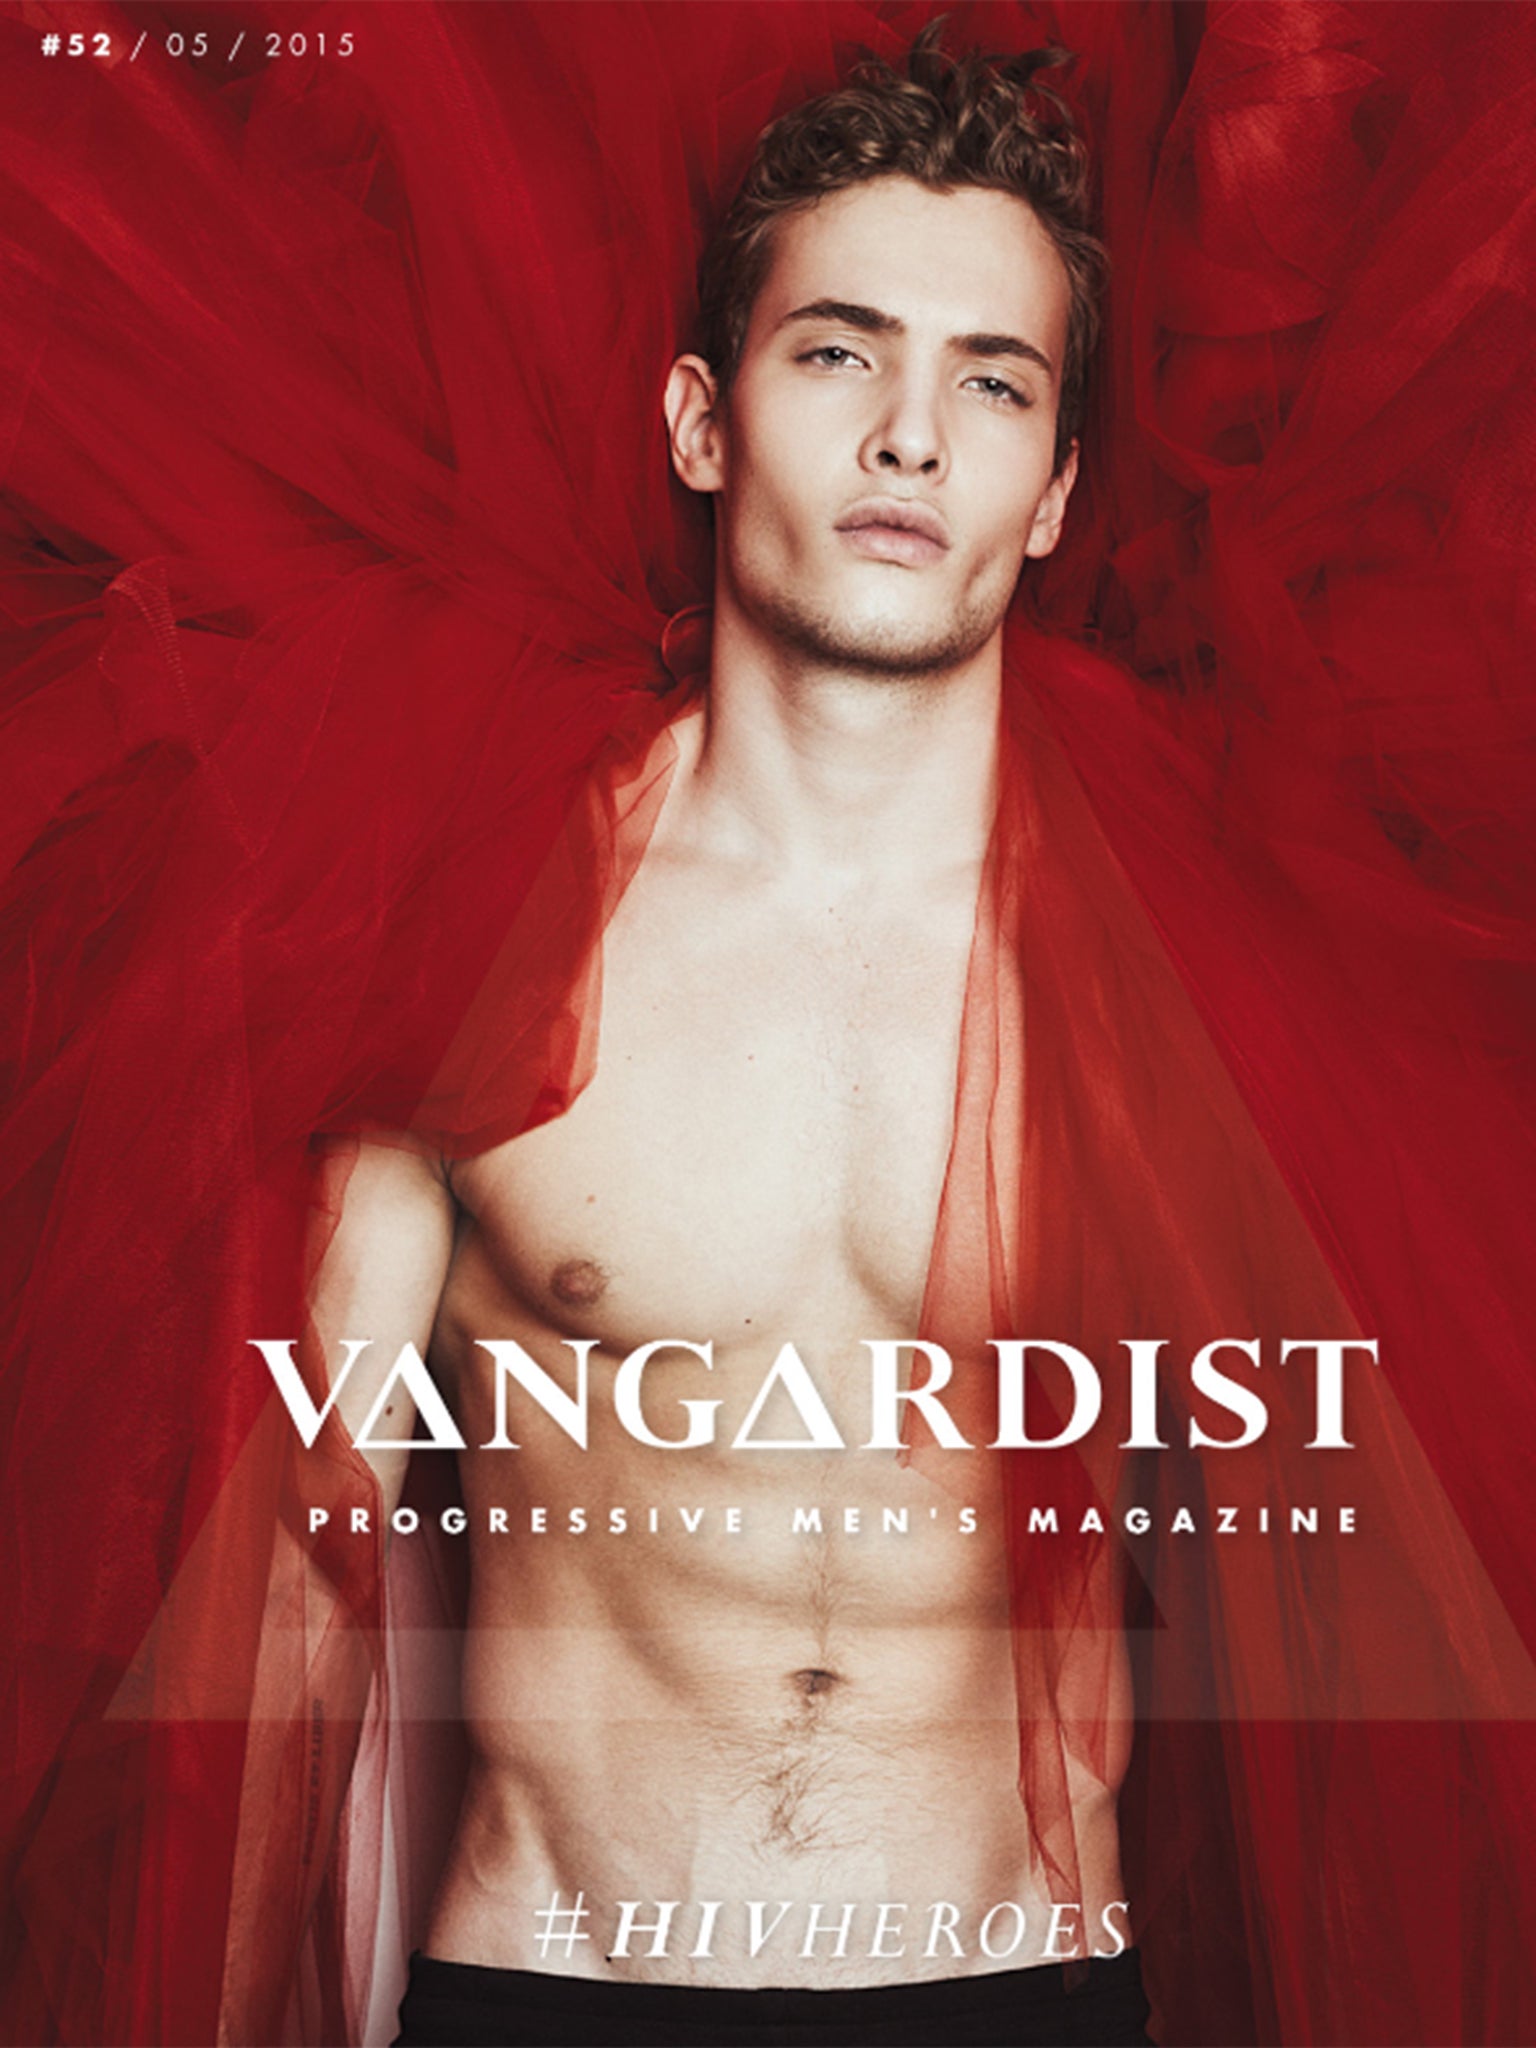 The #HIVHeroes edition of Vangardist magazine